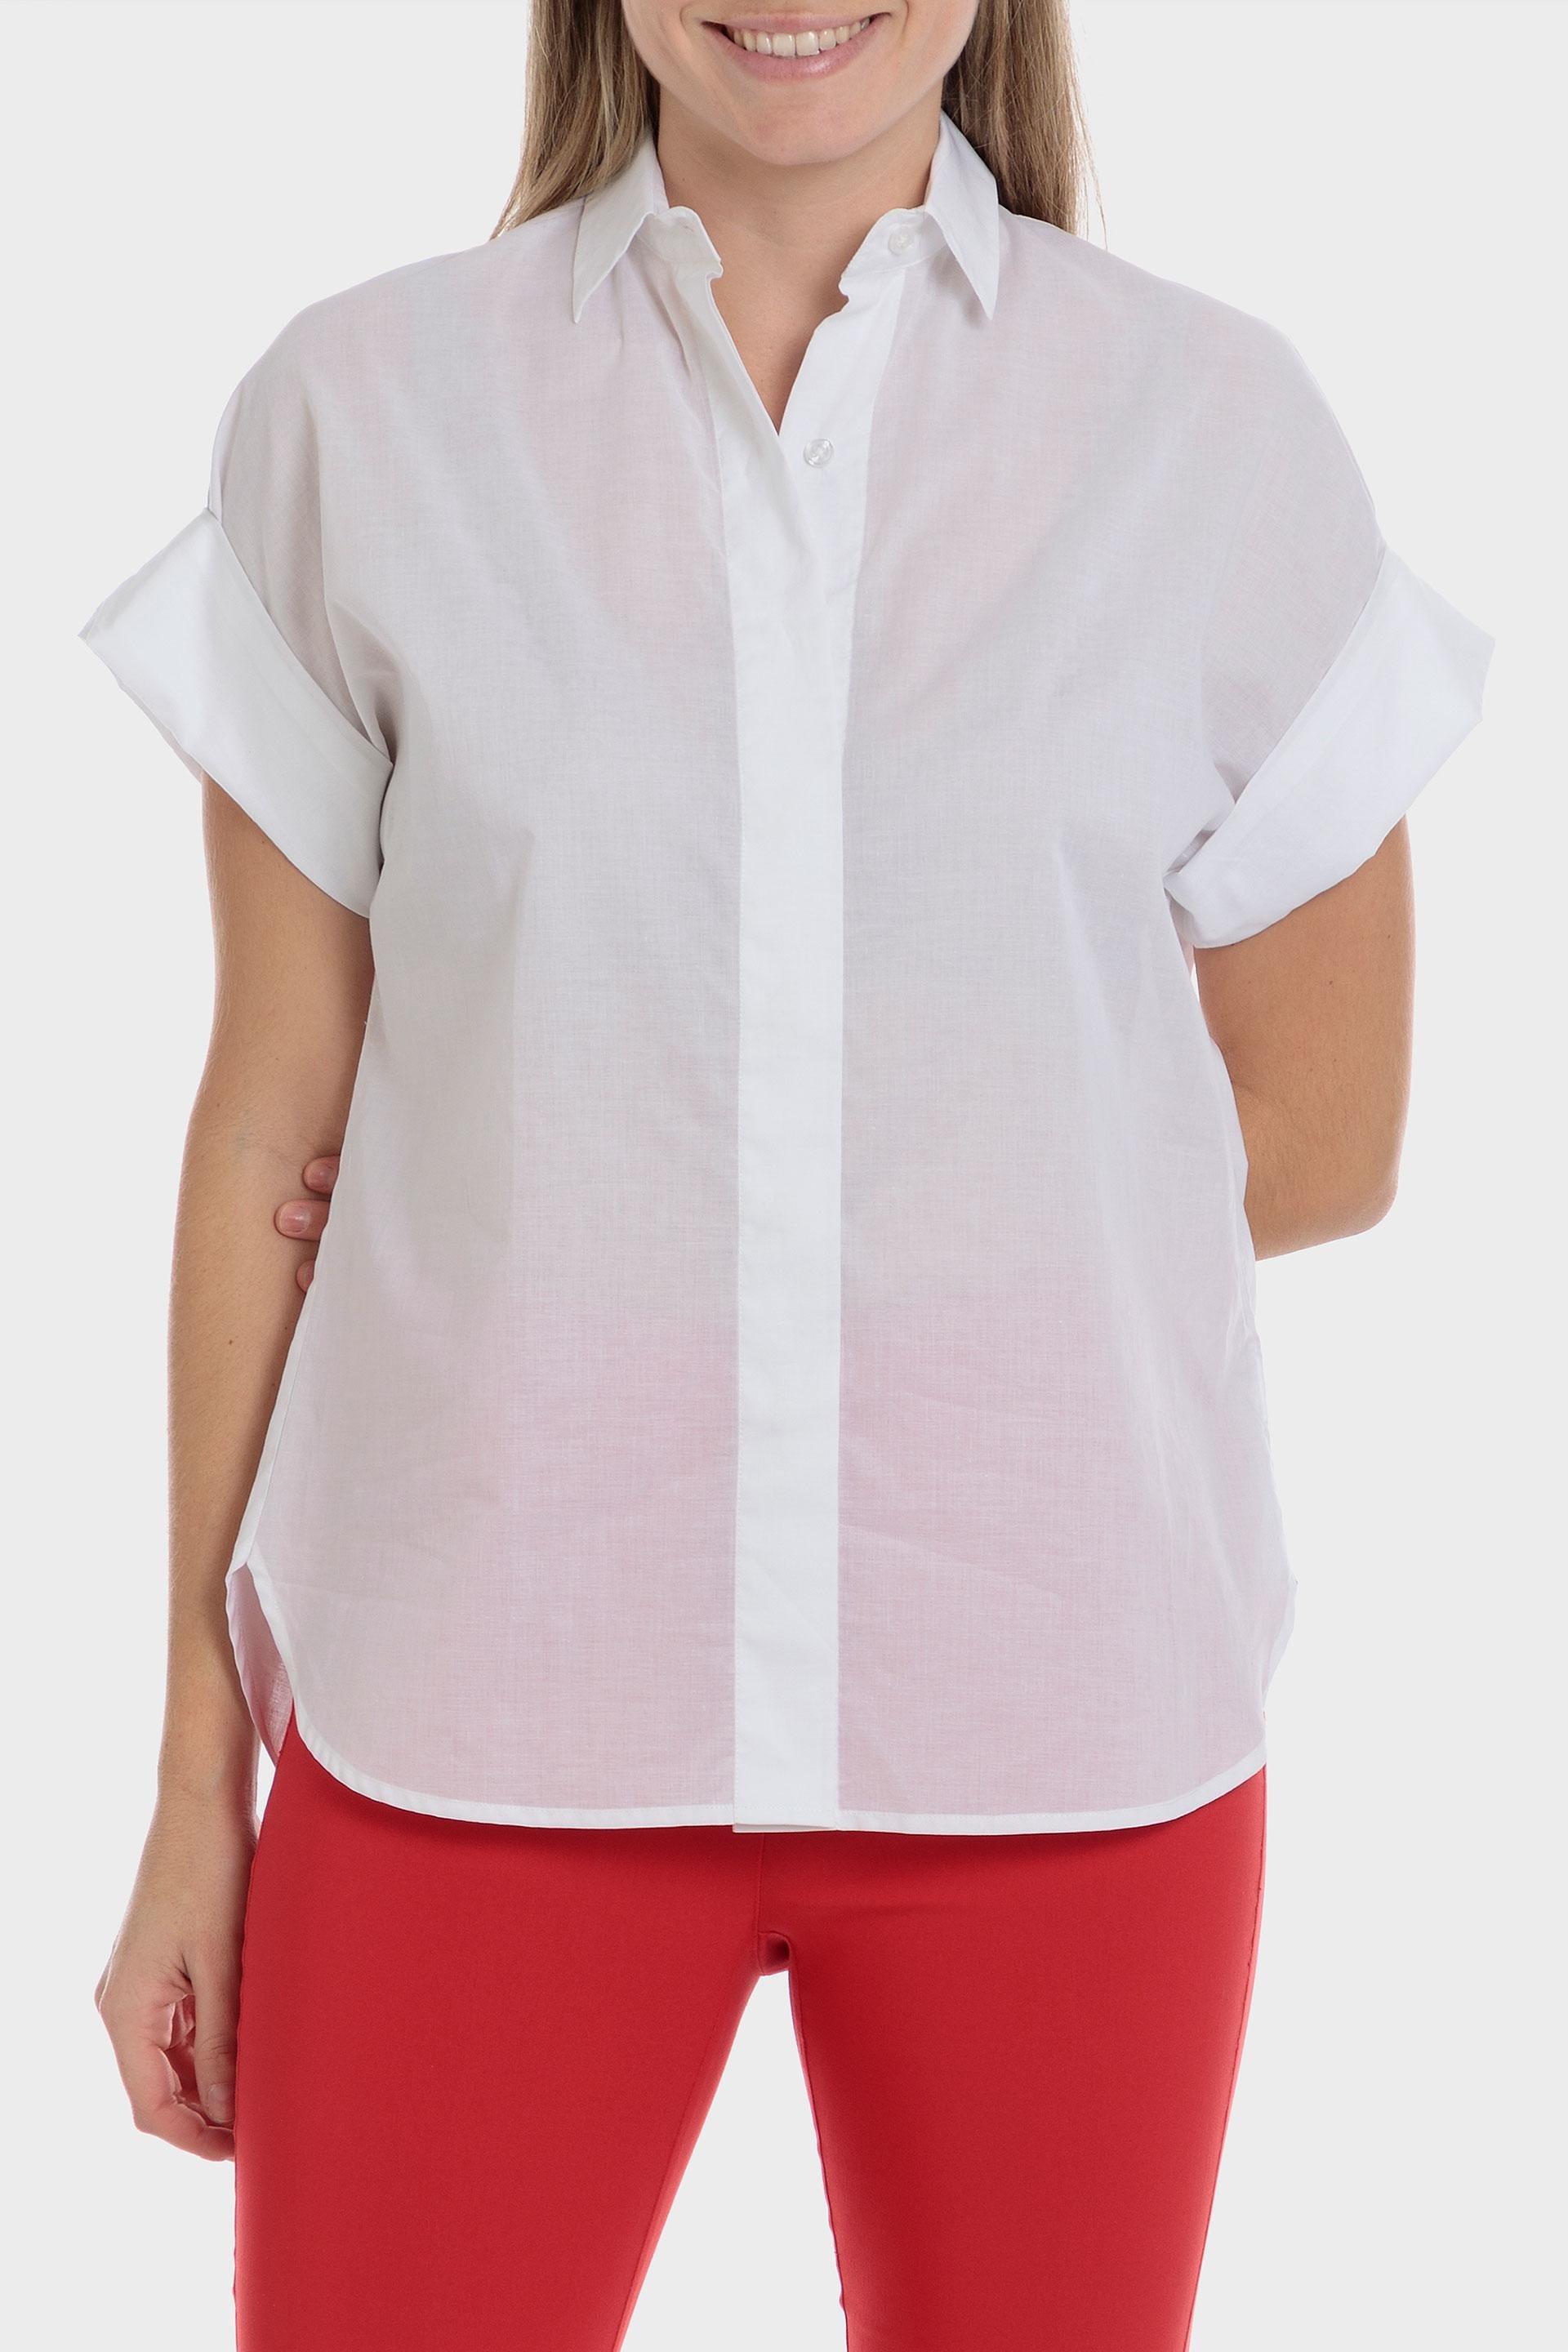 Punt Roma - White Short Sleeve Buttoned Shirt